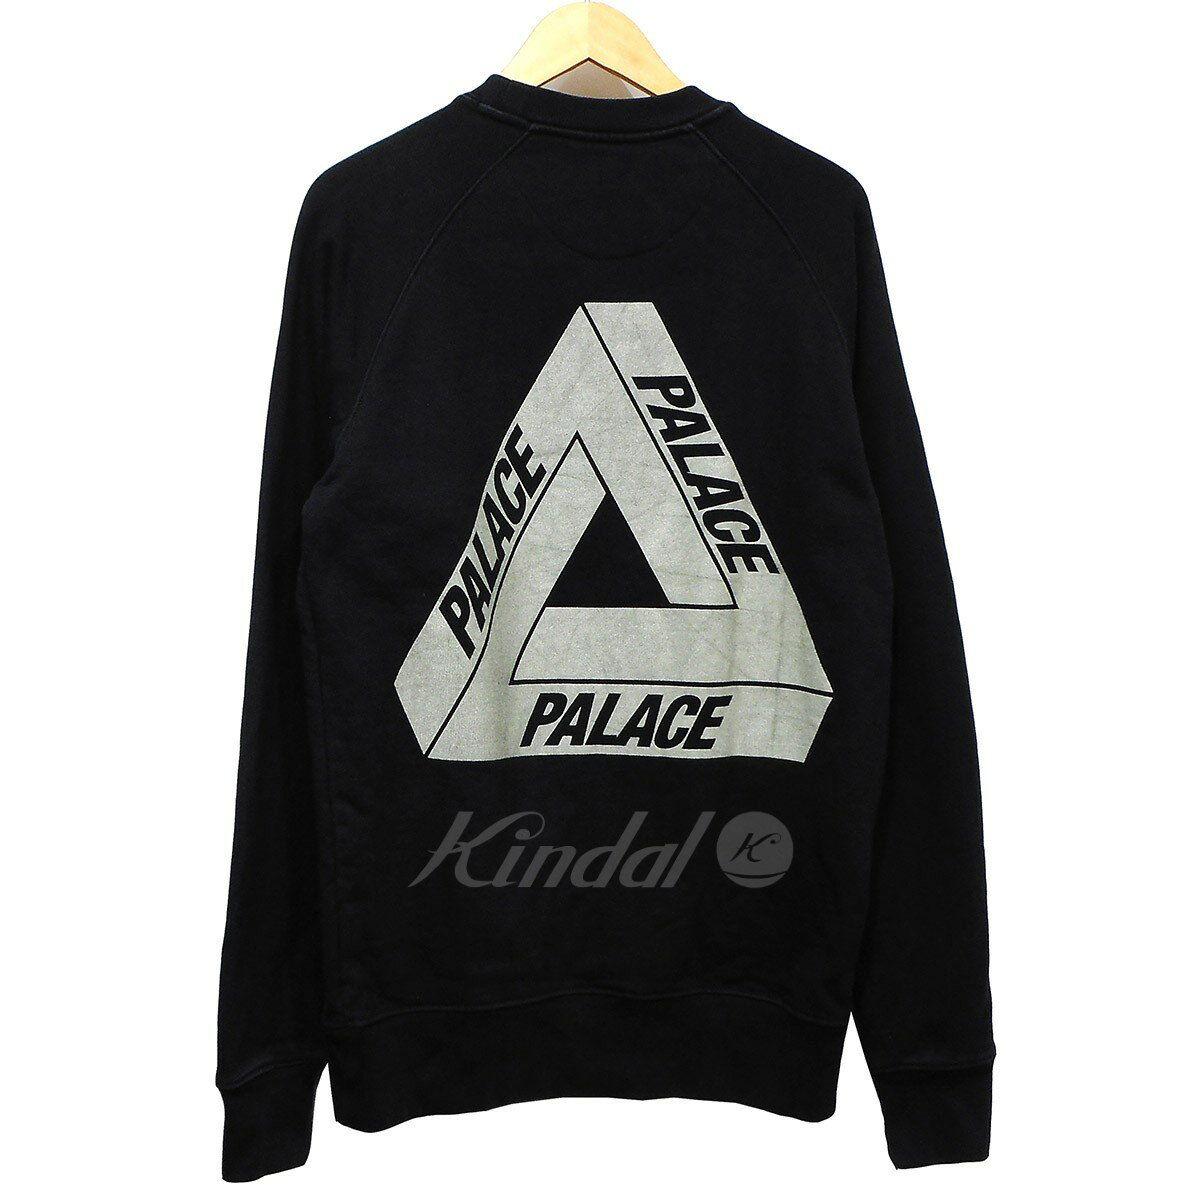 Palace Triangle Logo - kindal: PALACE 3M CREWNECK triangle logo crew neck sweat shirt